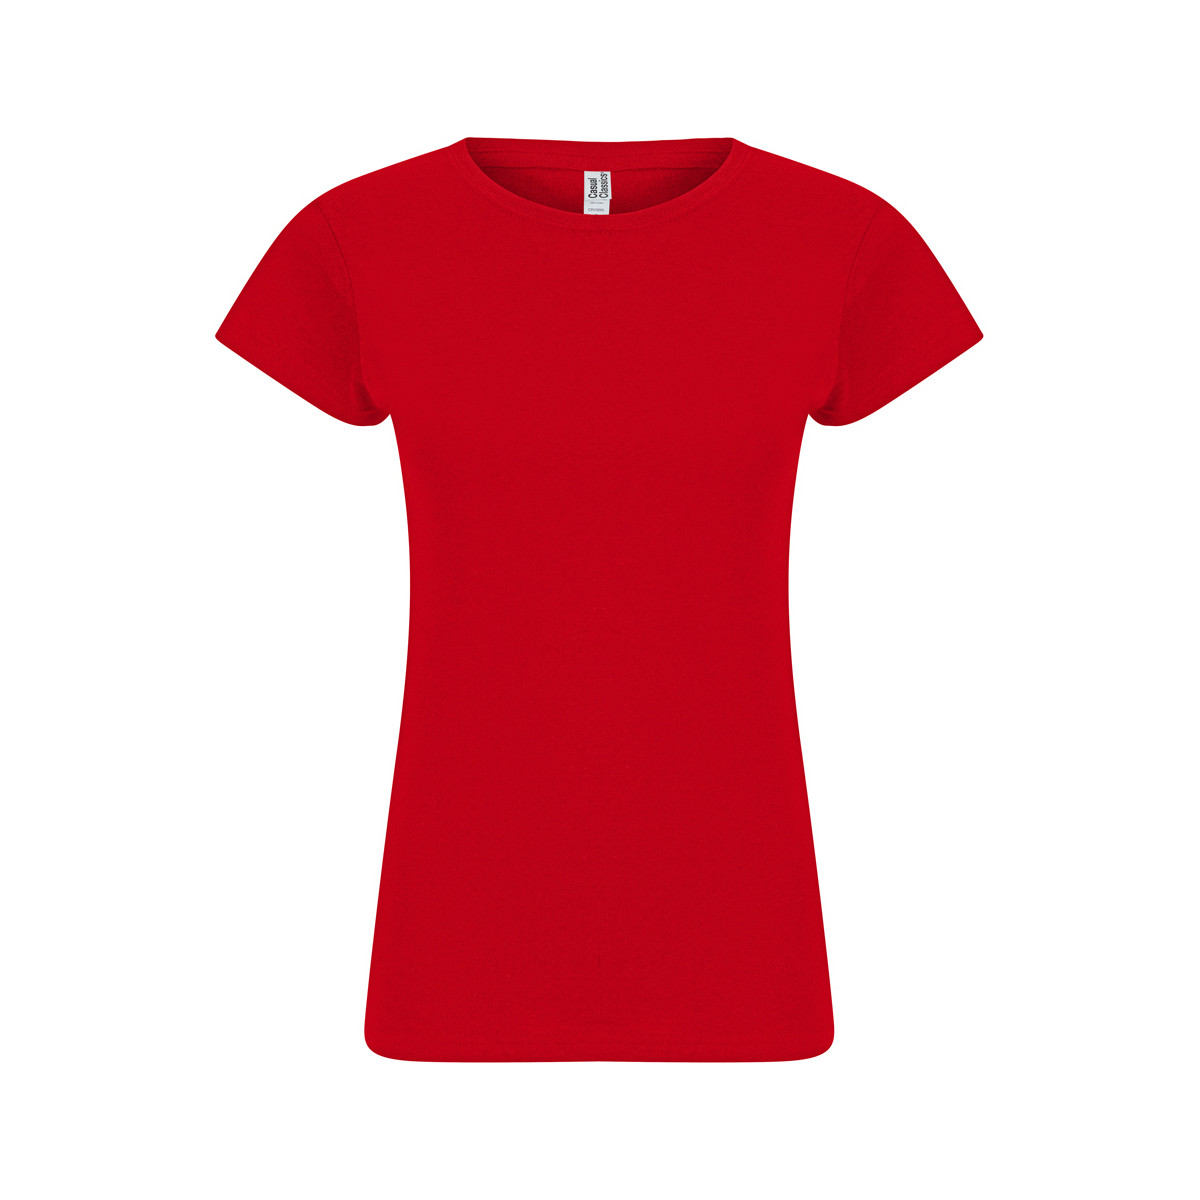 Vêtements Femme T-shirts manches longues Casual Classics AB514 Rouge